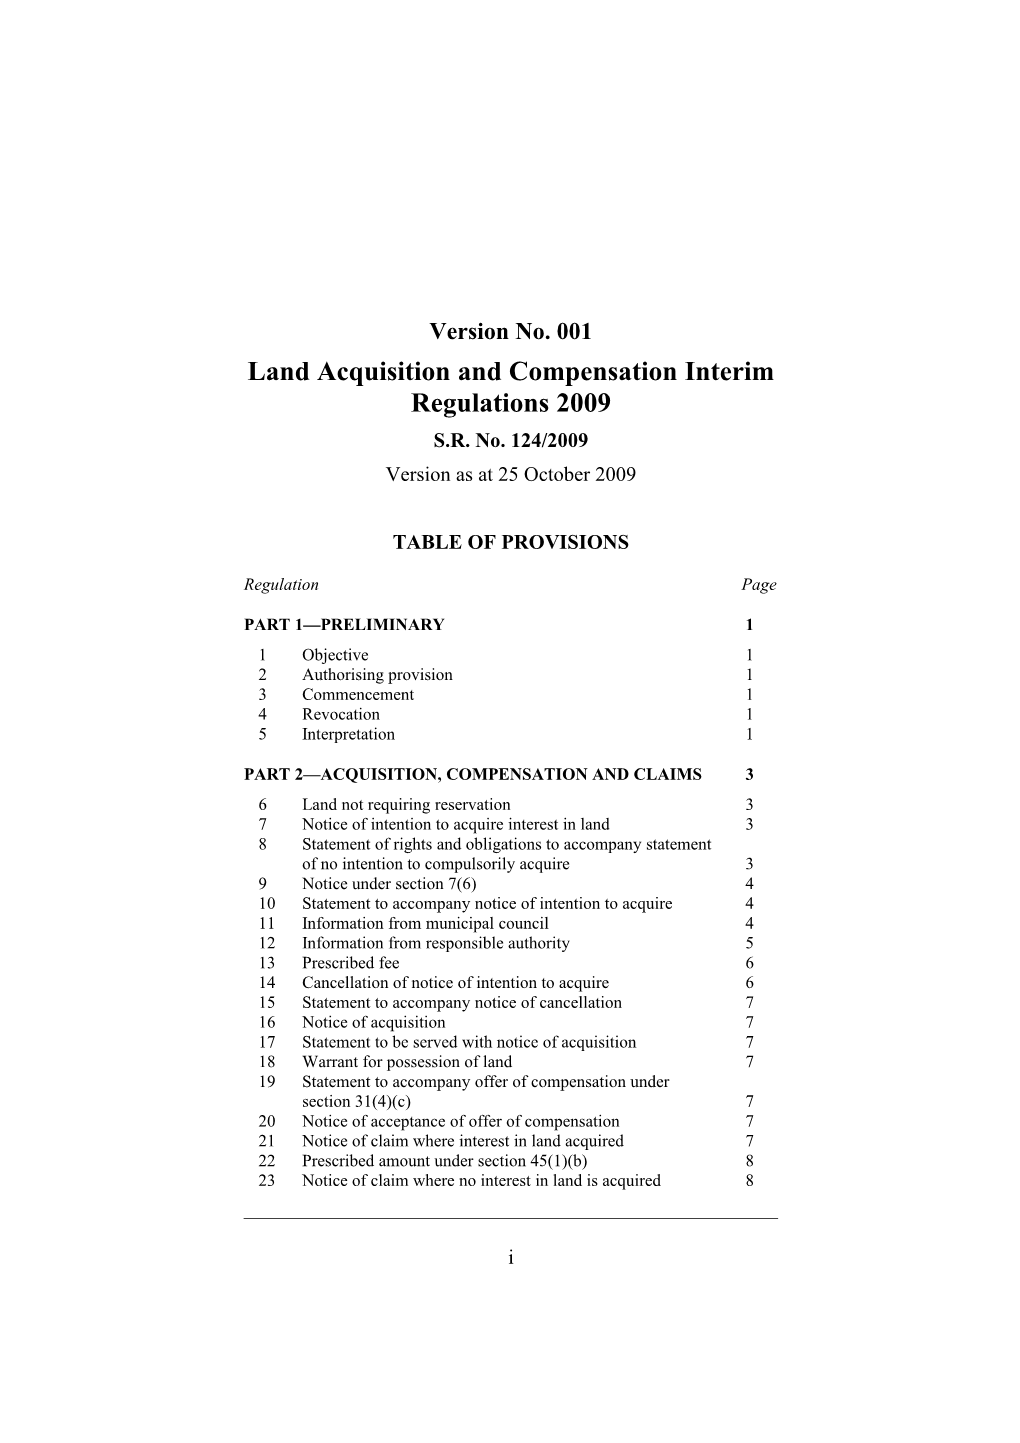 Land Acquisition and Compensation Interim Regulations 2009